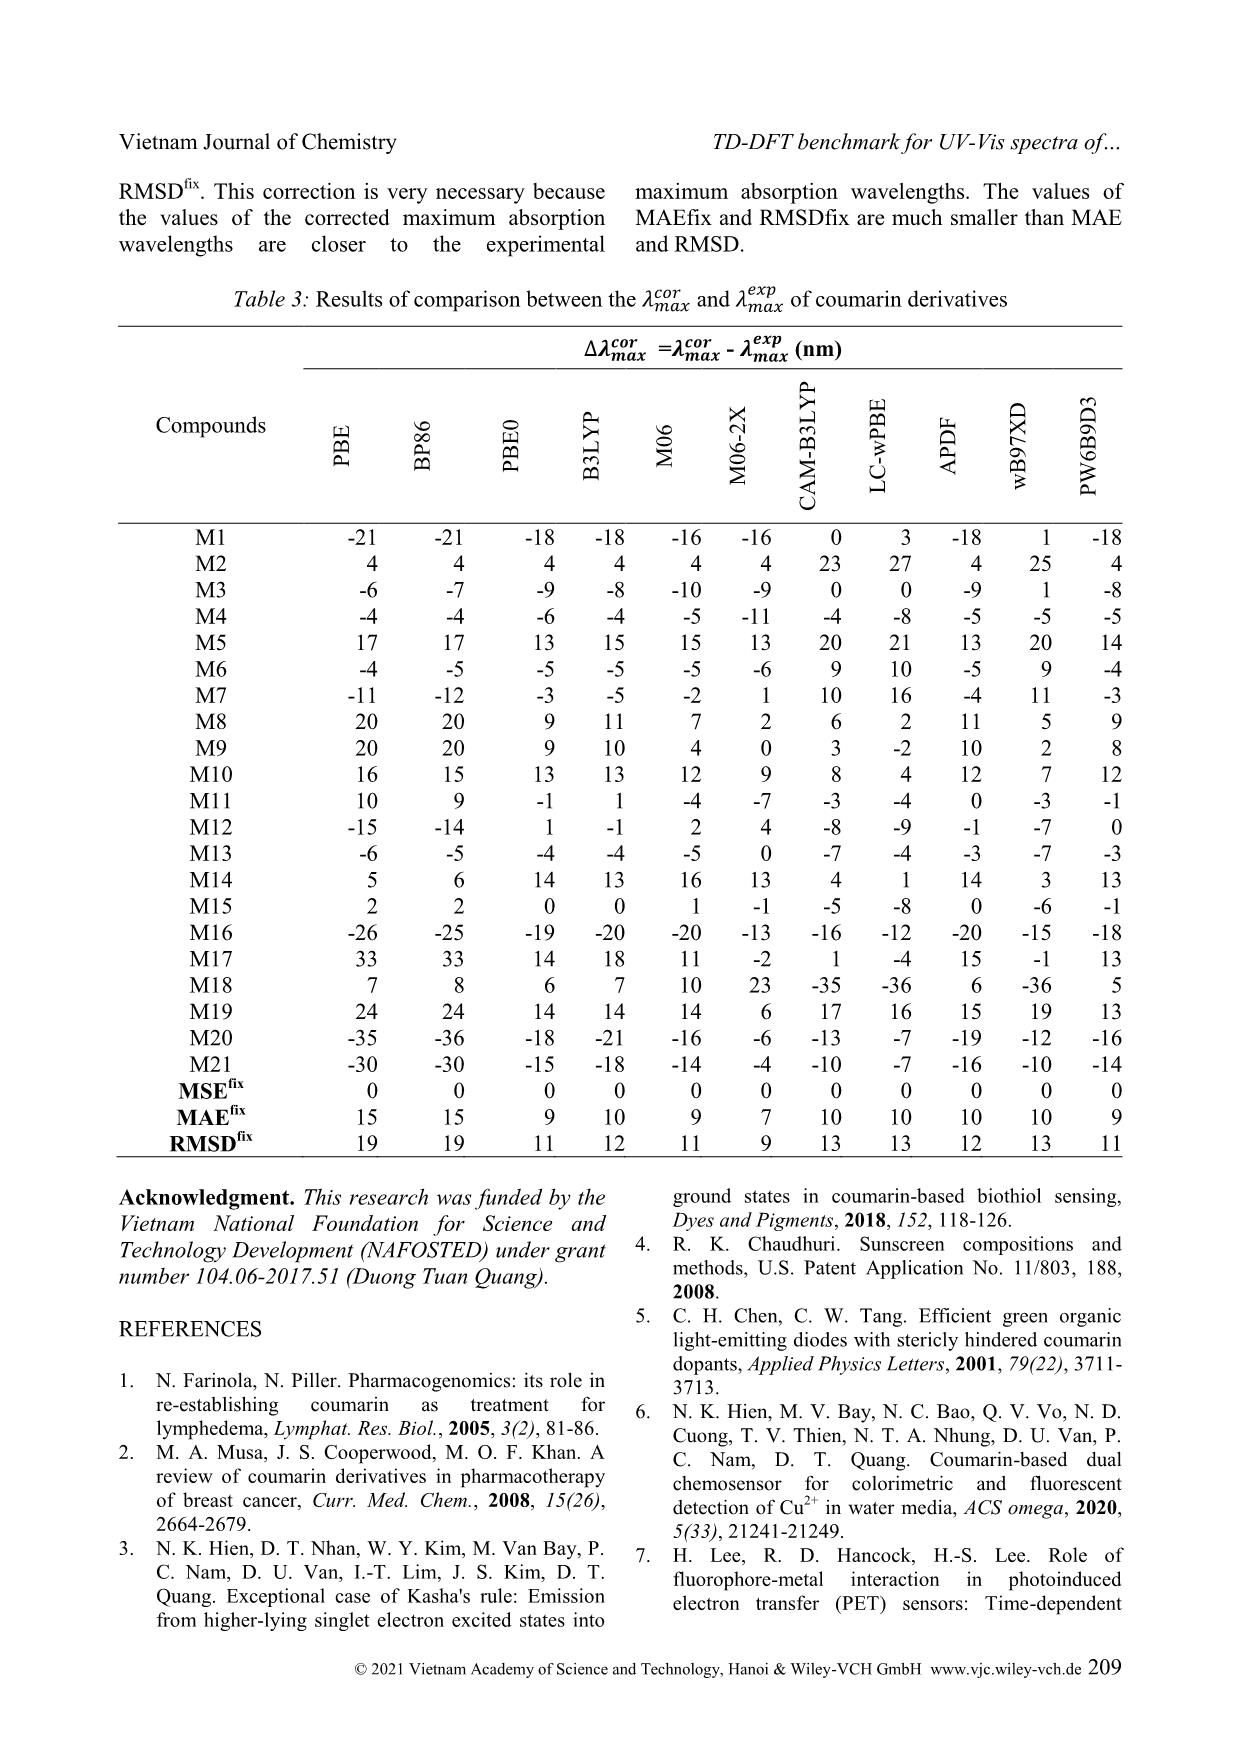 TD-DFT benchmark for UV-Vis spectra of coumarin derivatives trang 7